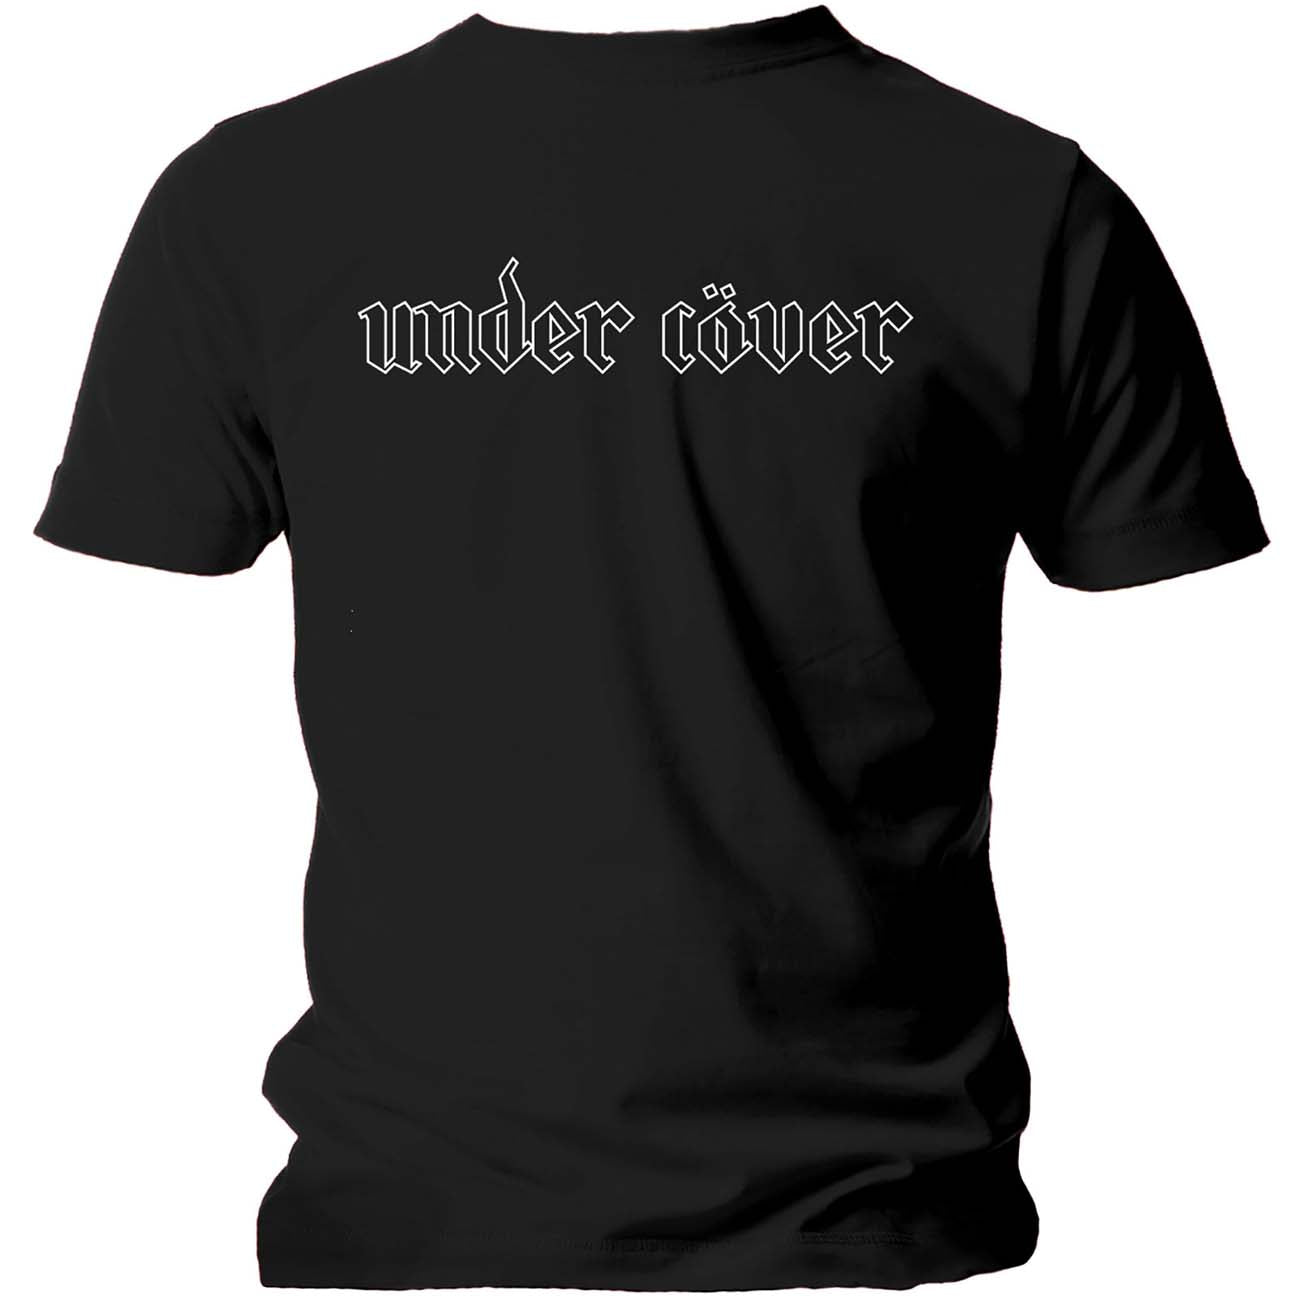 Motorhead T-Shirt - Under Cover Album Cover (Unisex) - Back